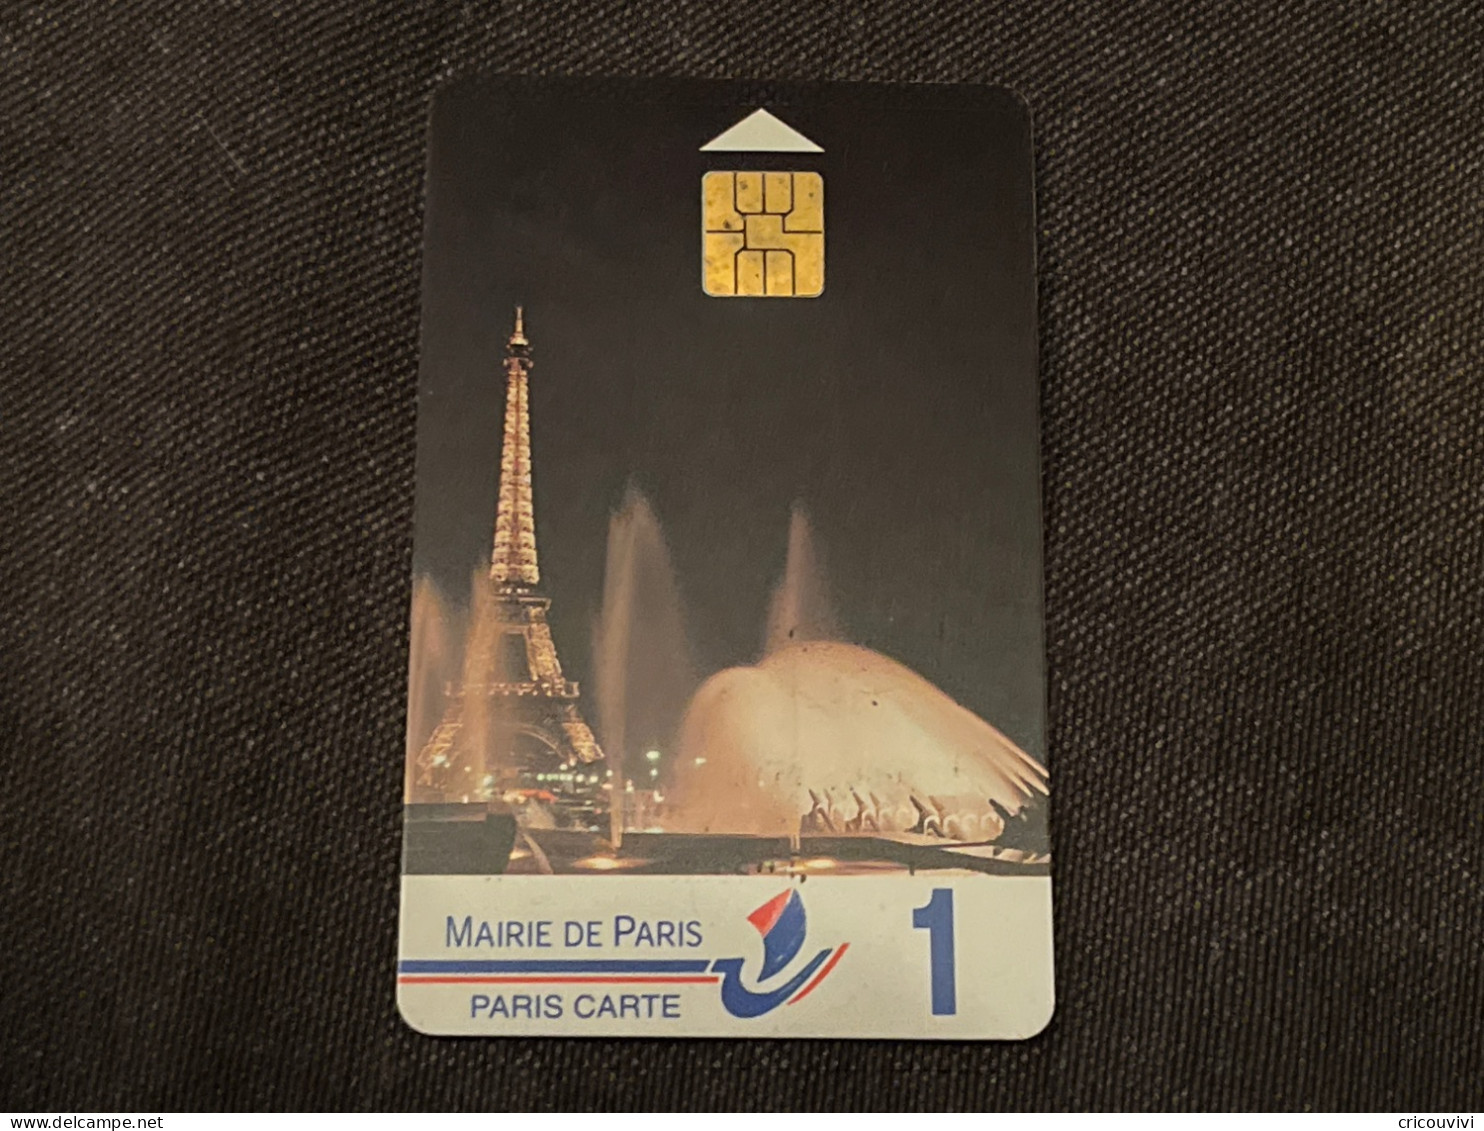 Paris Carte 11 - PIAF Parking Cards